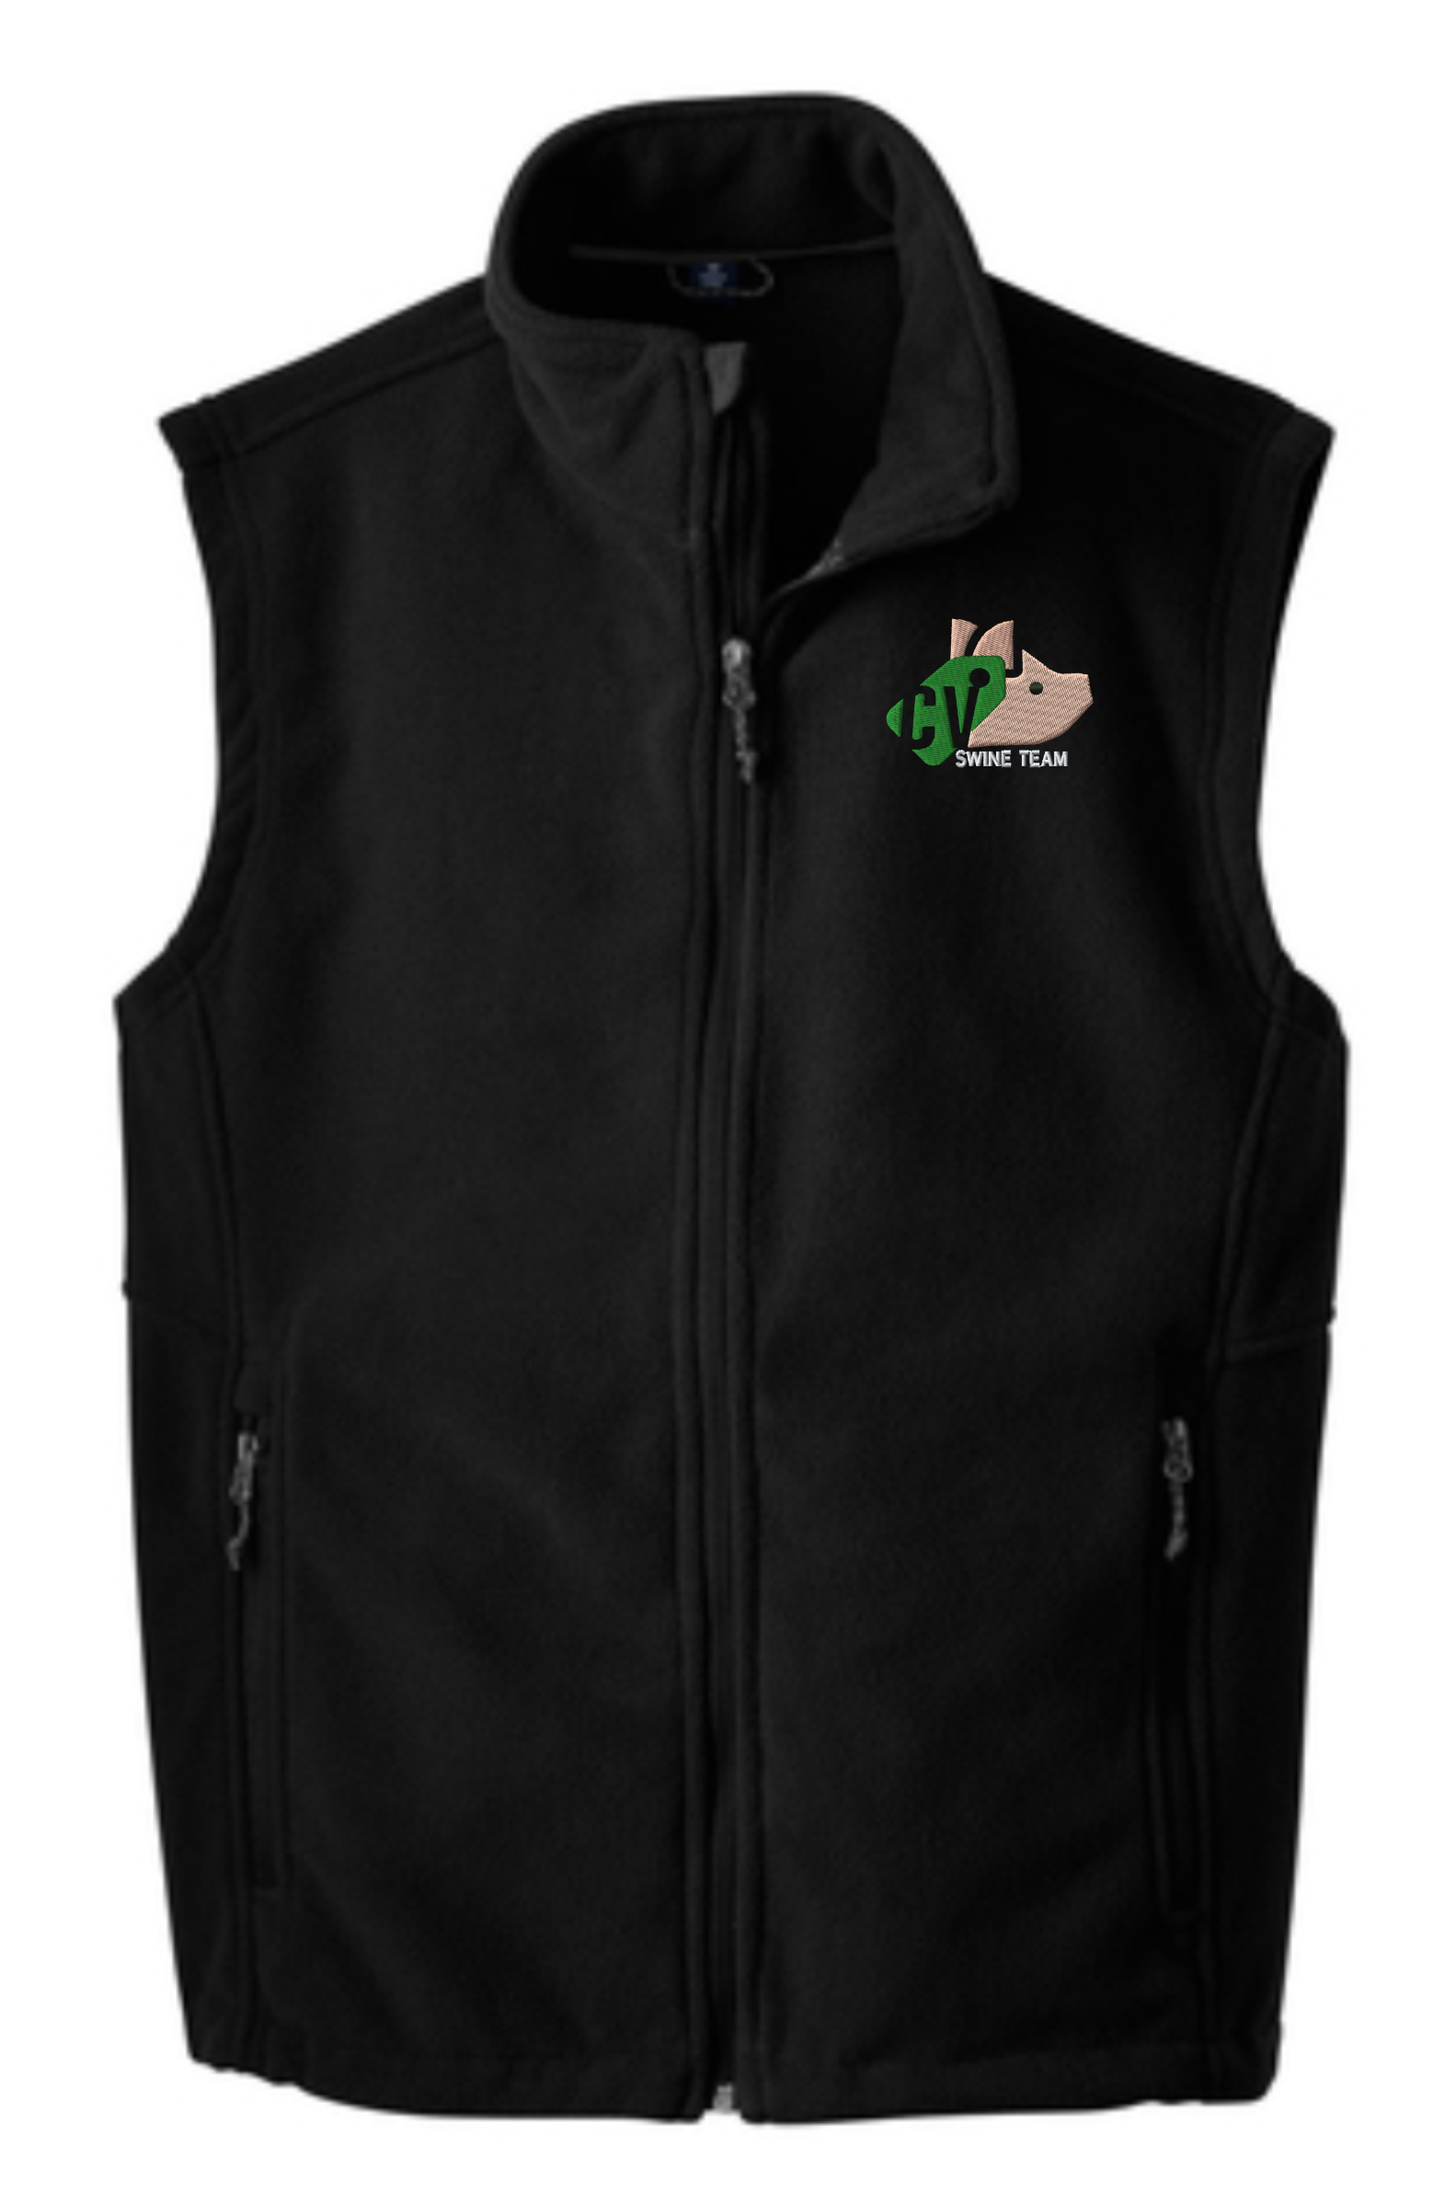 Carmel Valley 4-H Swine Team Port Authority Fleece Vest